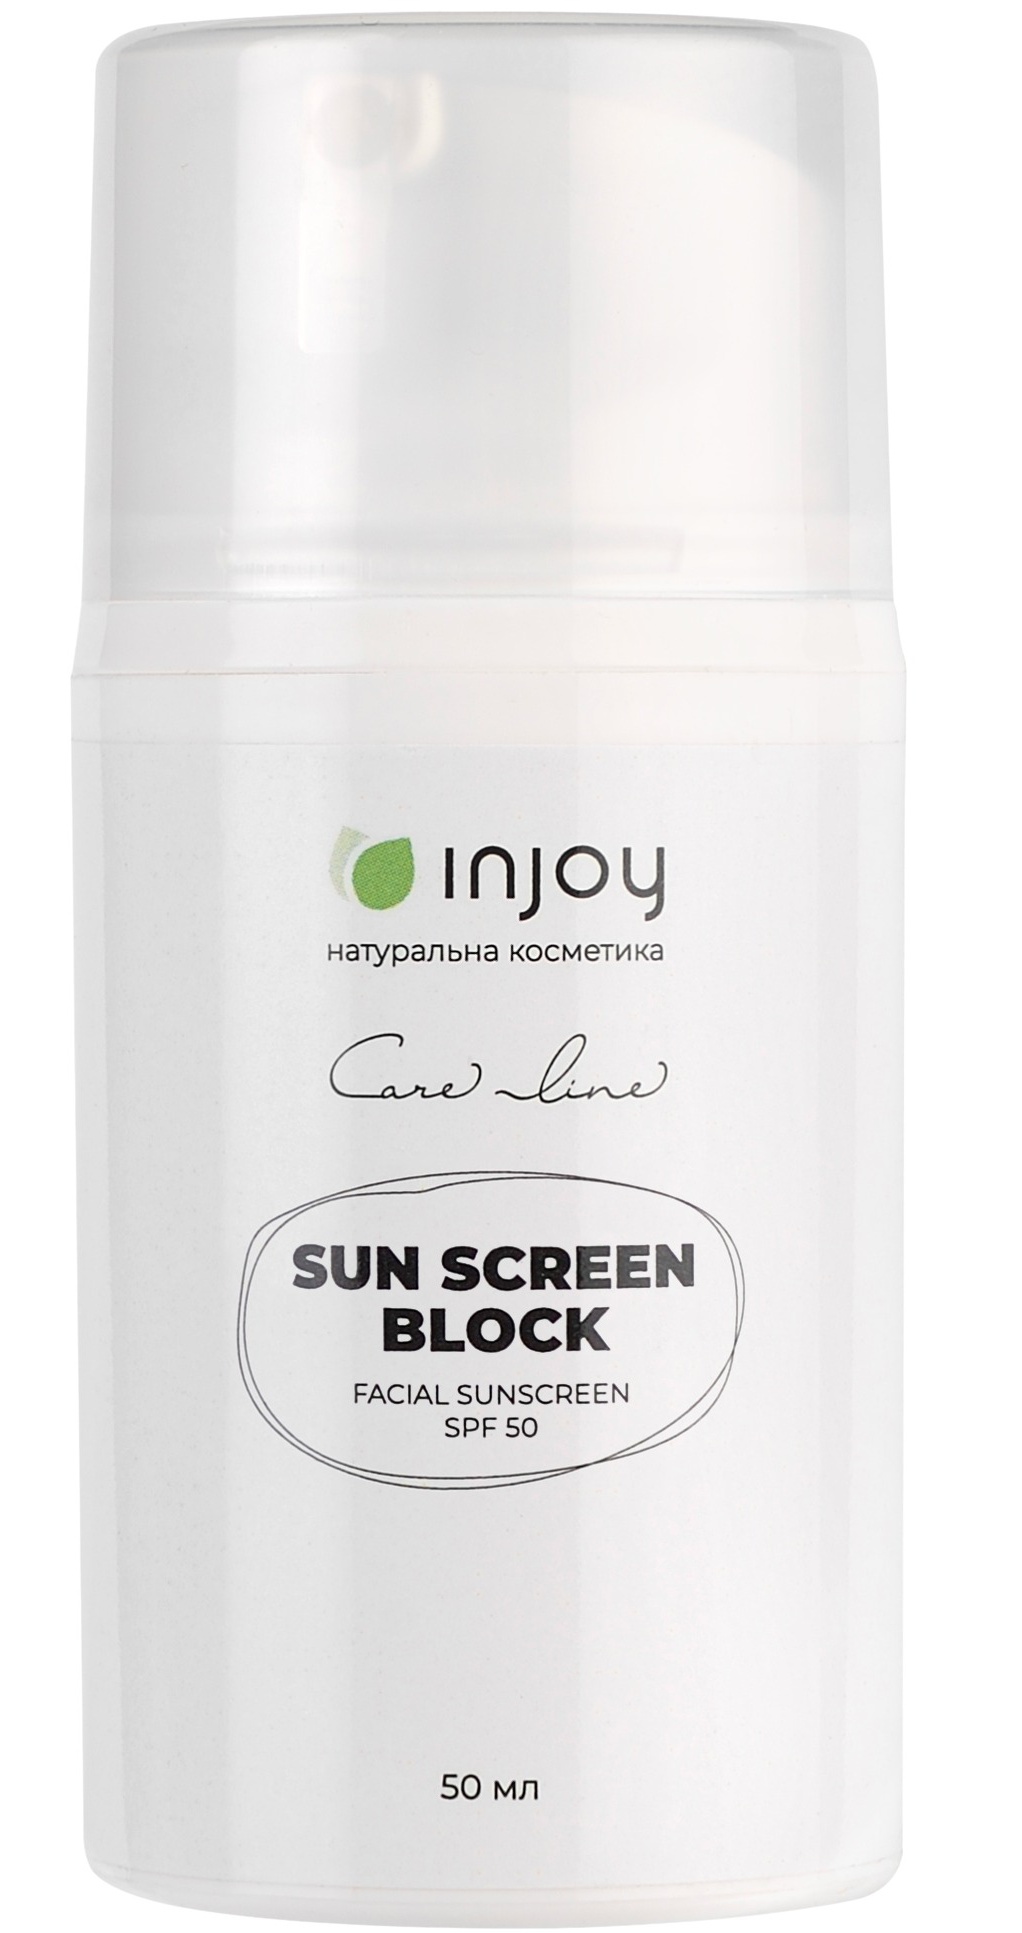 InJoy Sun Screen Block